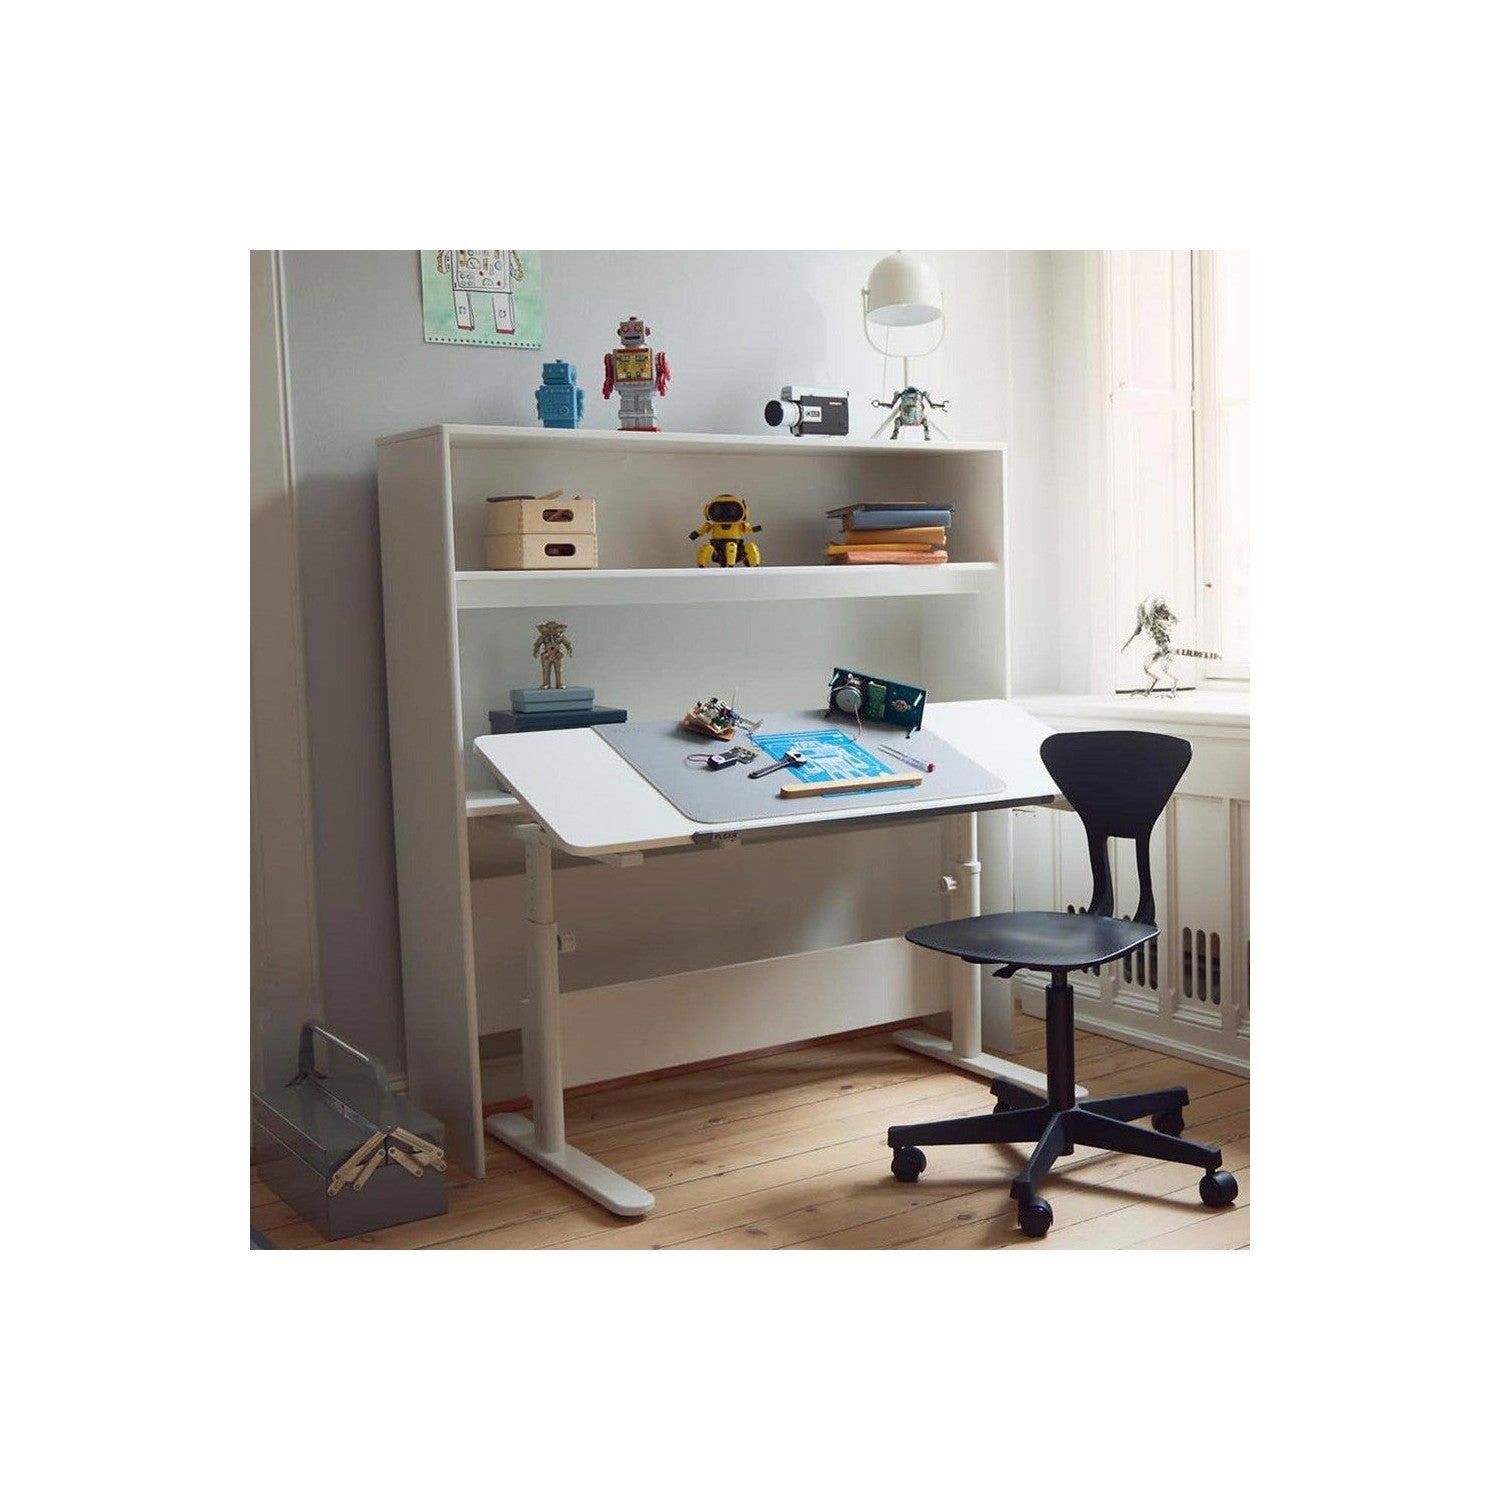 FLEXA Evo Study Desk – tilting desktop